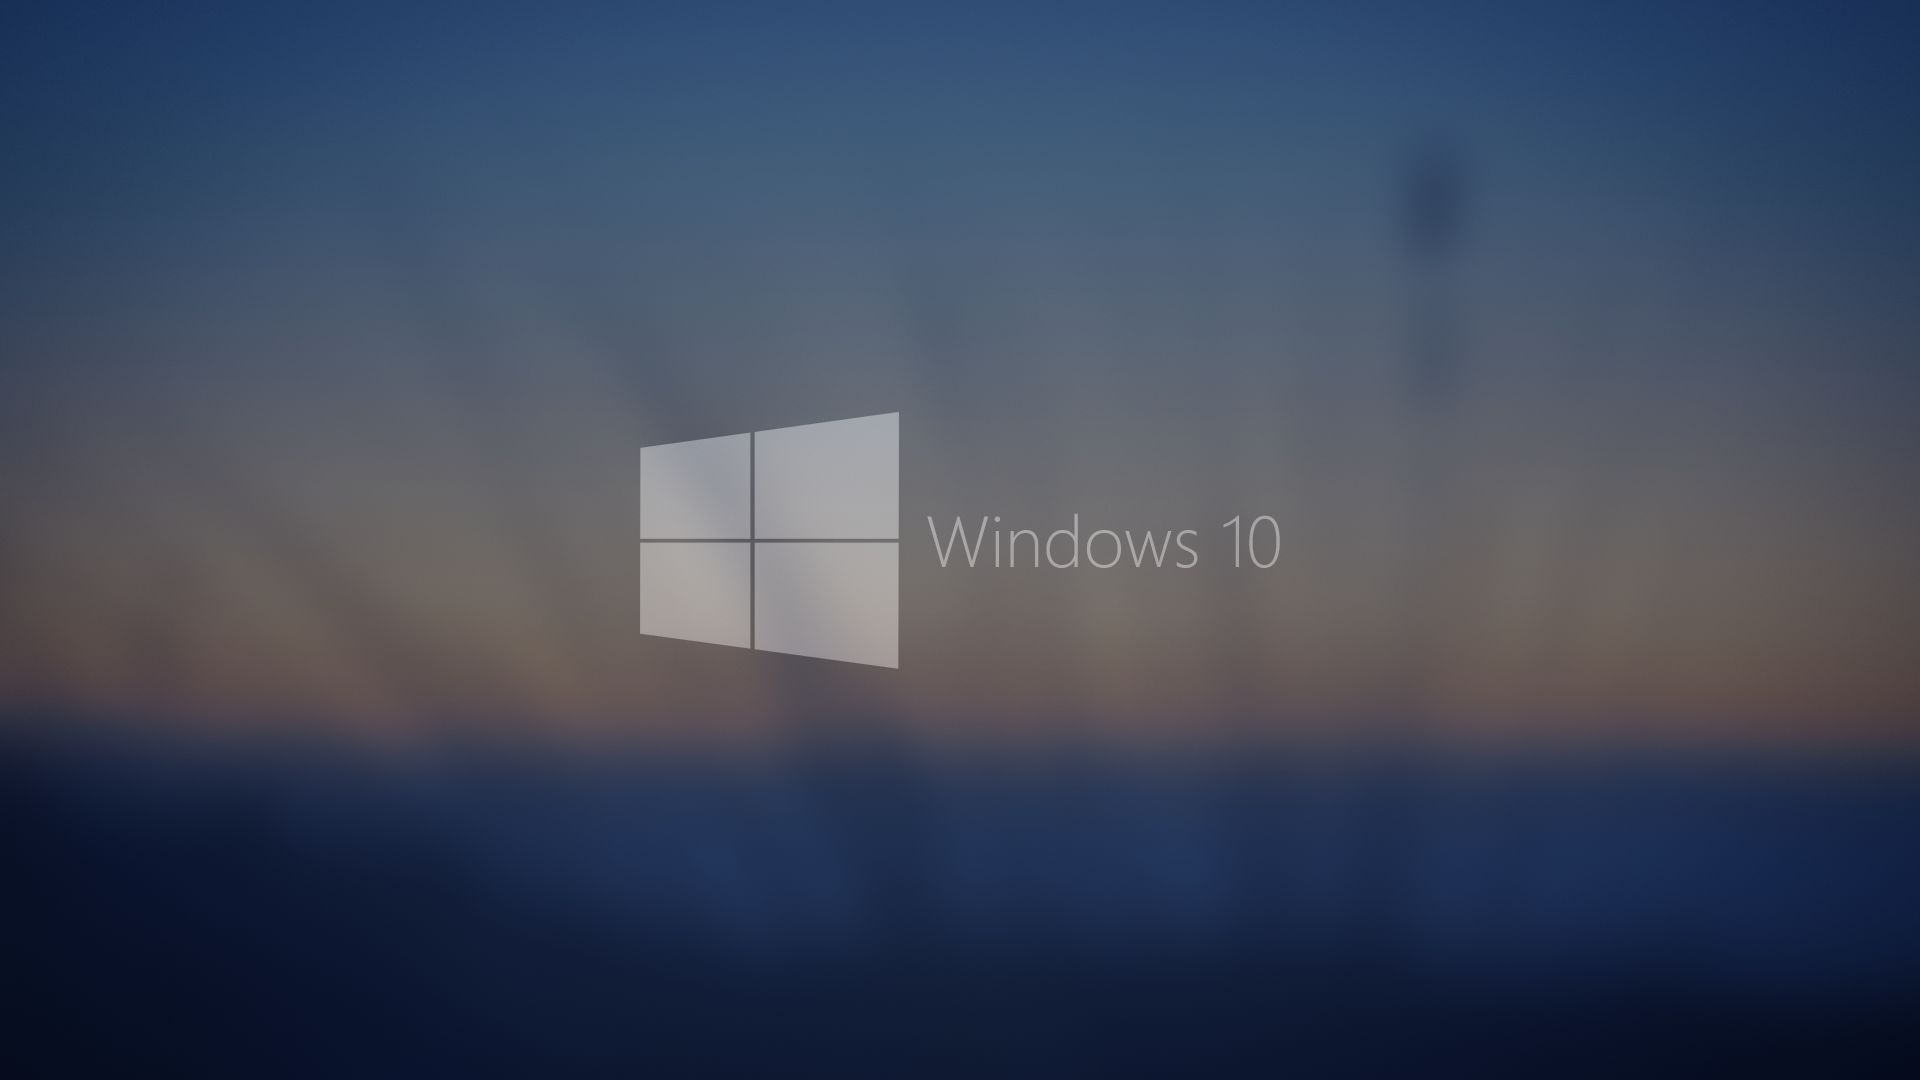 microsoft, technology, windows 10, windows